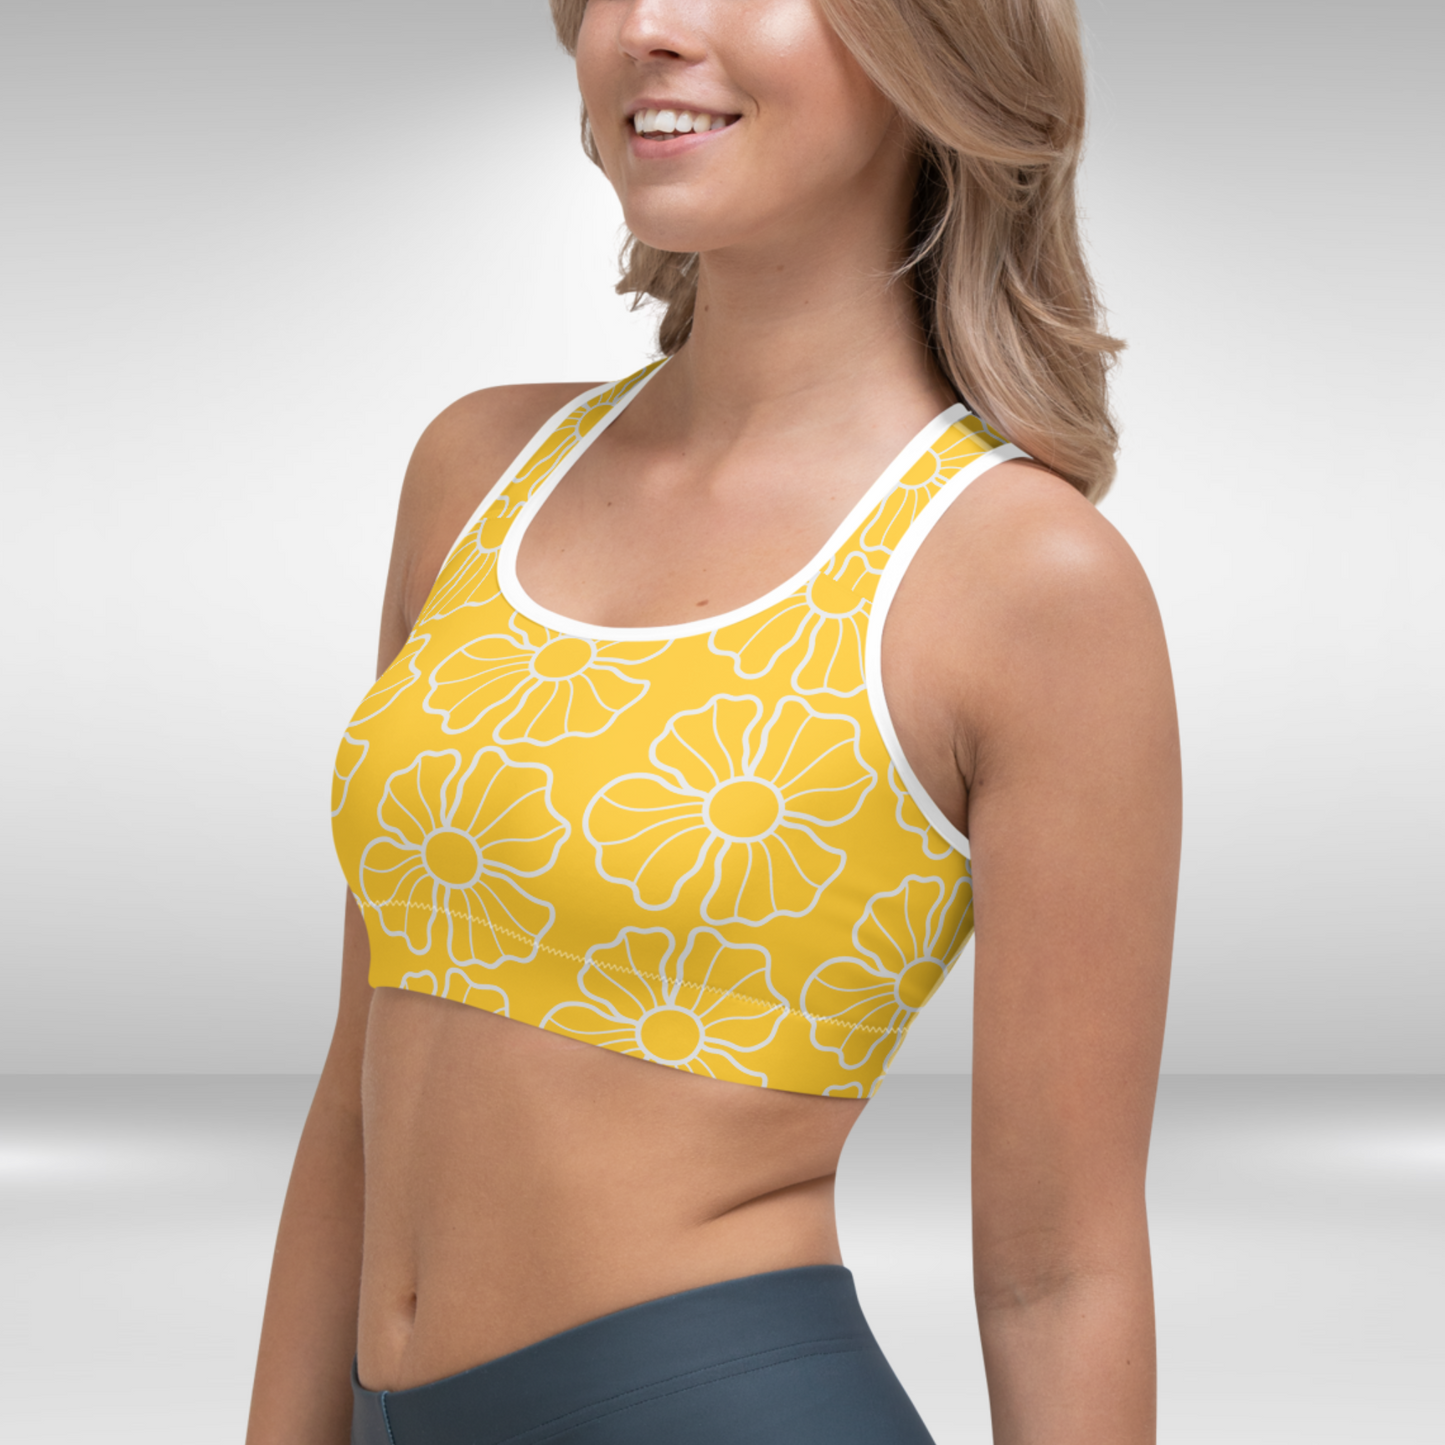 Women Sports Bra - Sunburst Yellow Floral Print